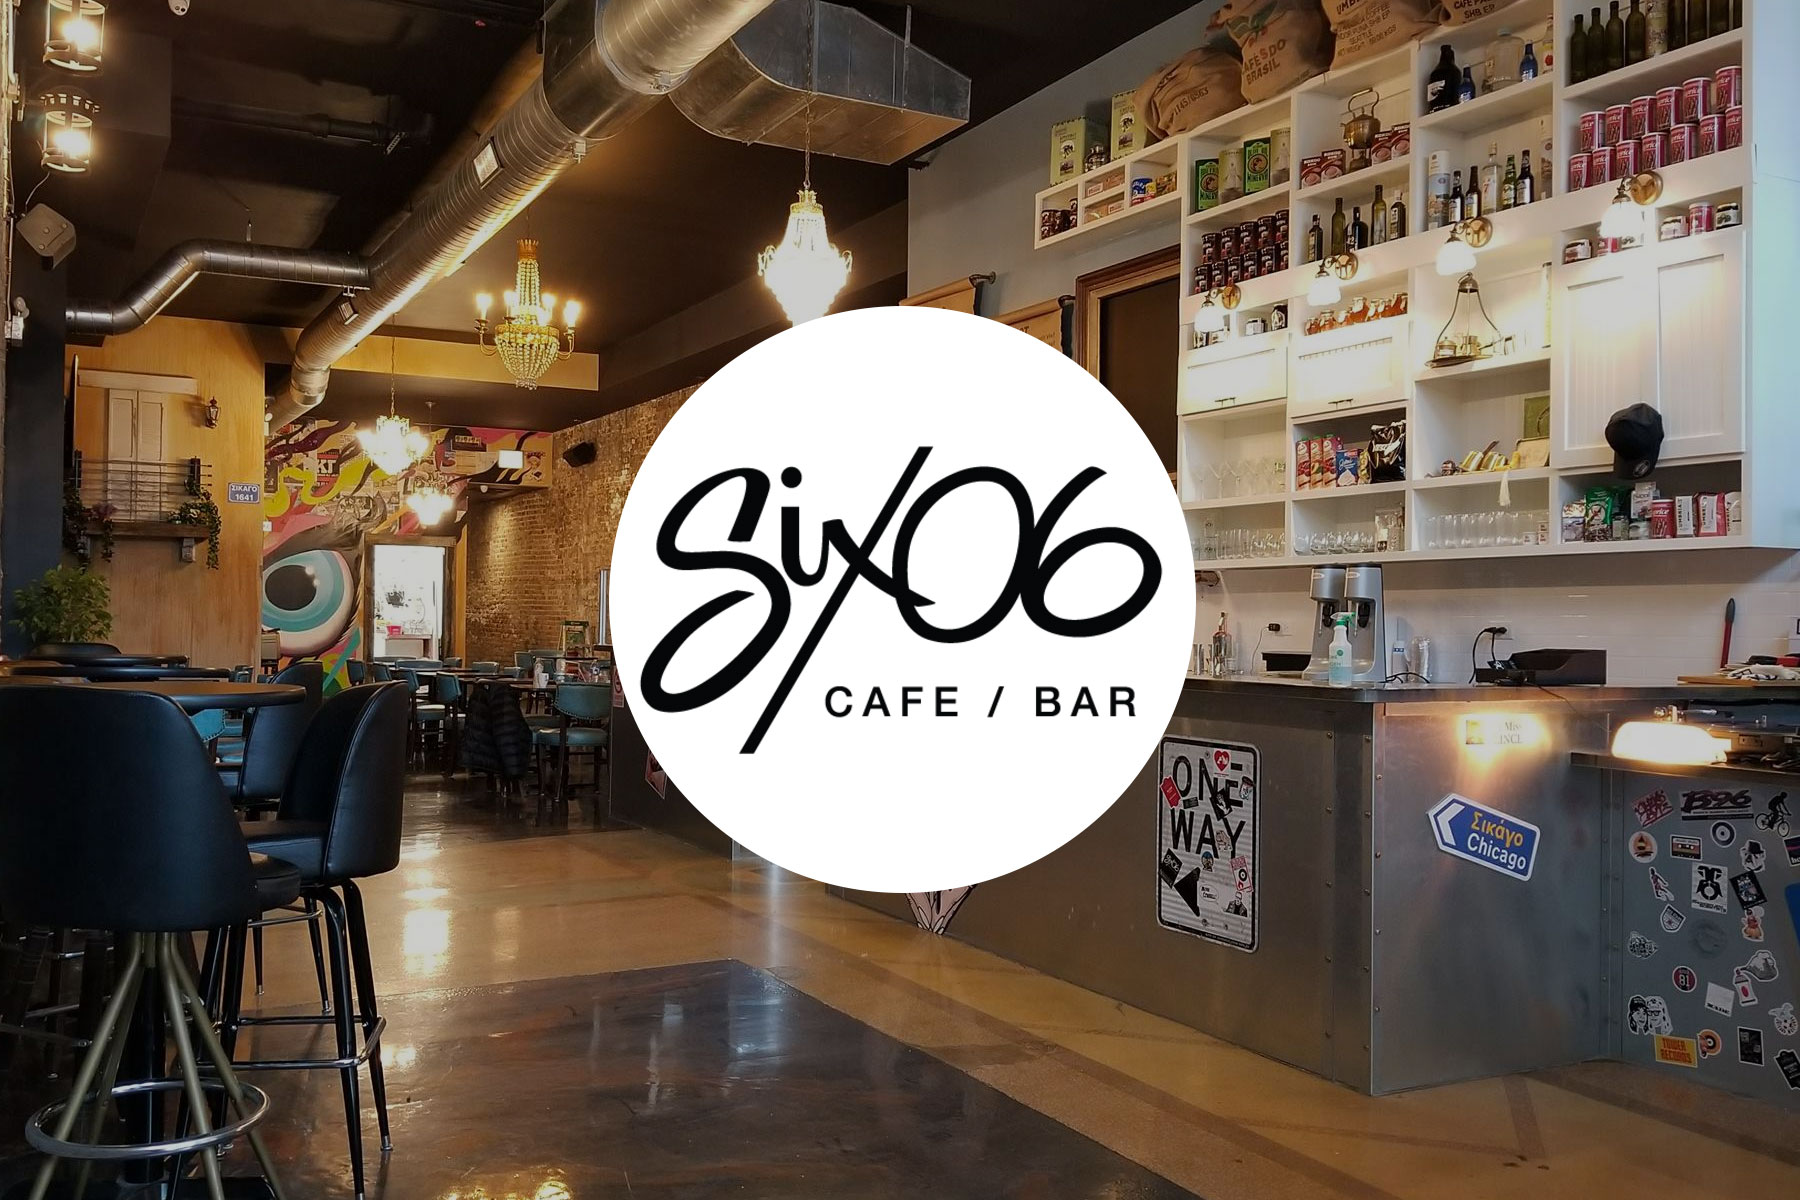 Cafe Six06 closing